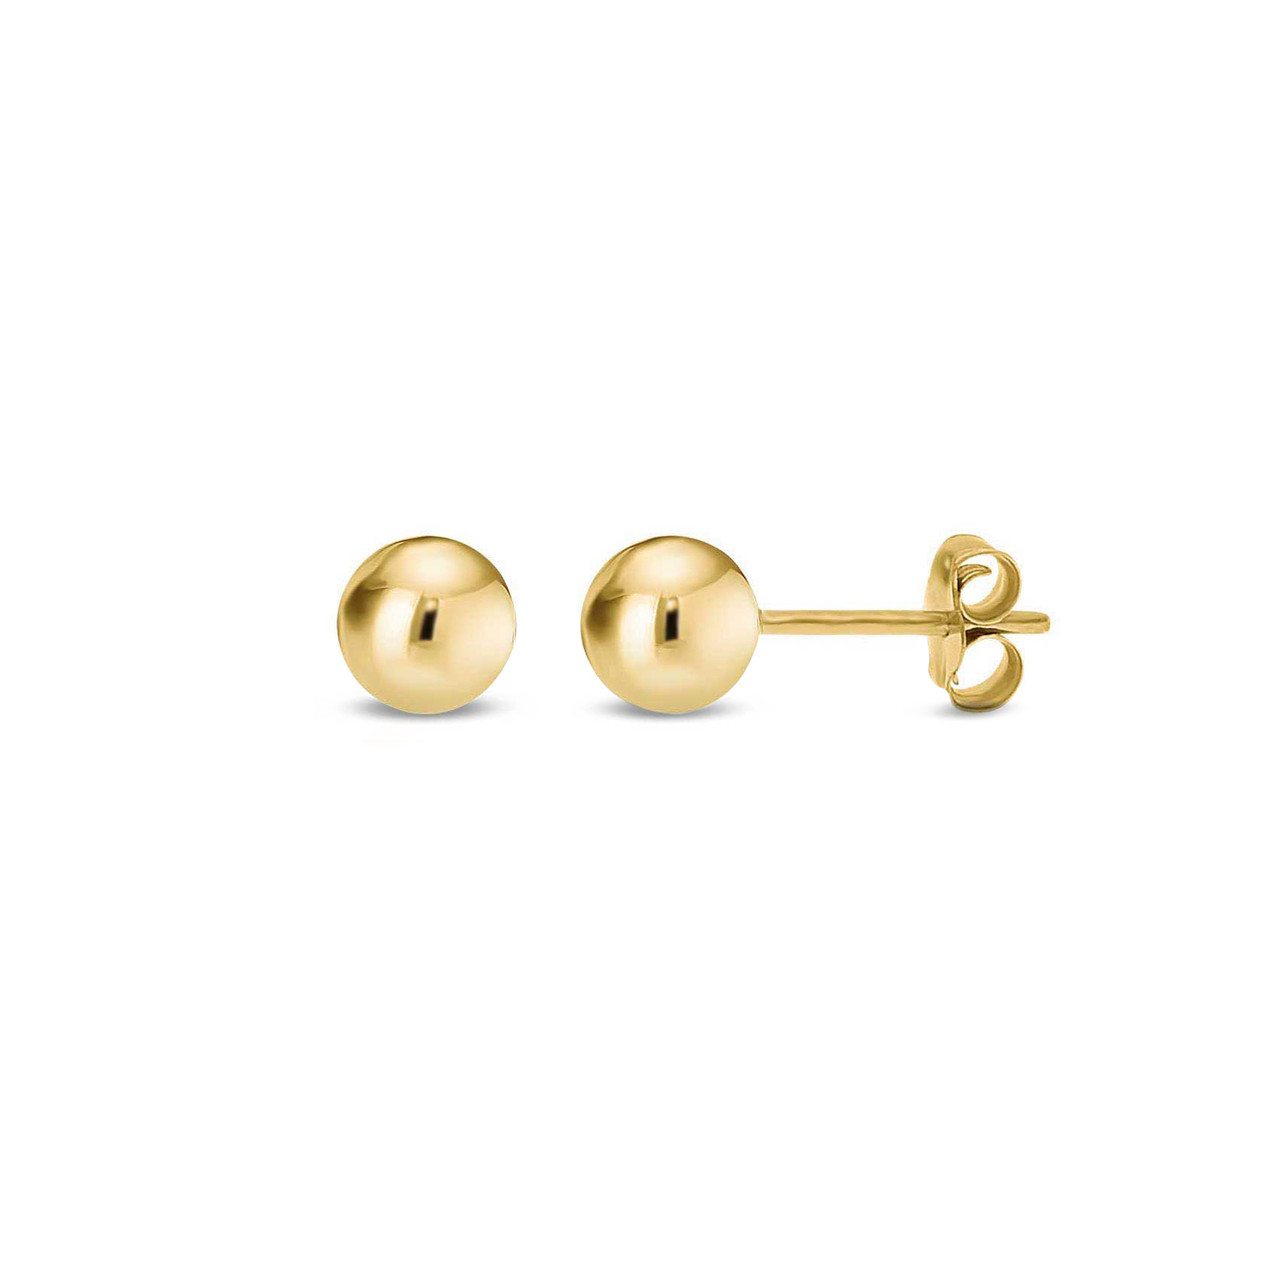  14K Yellow Gold Polished Ball Stud Earrings 3MM - 8MM